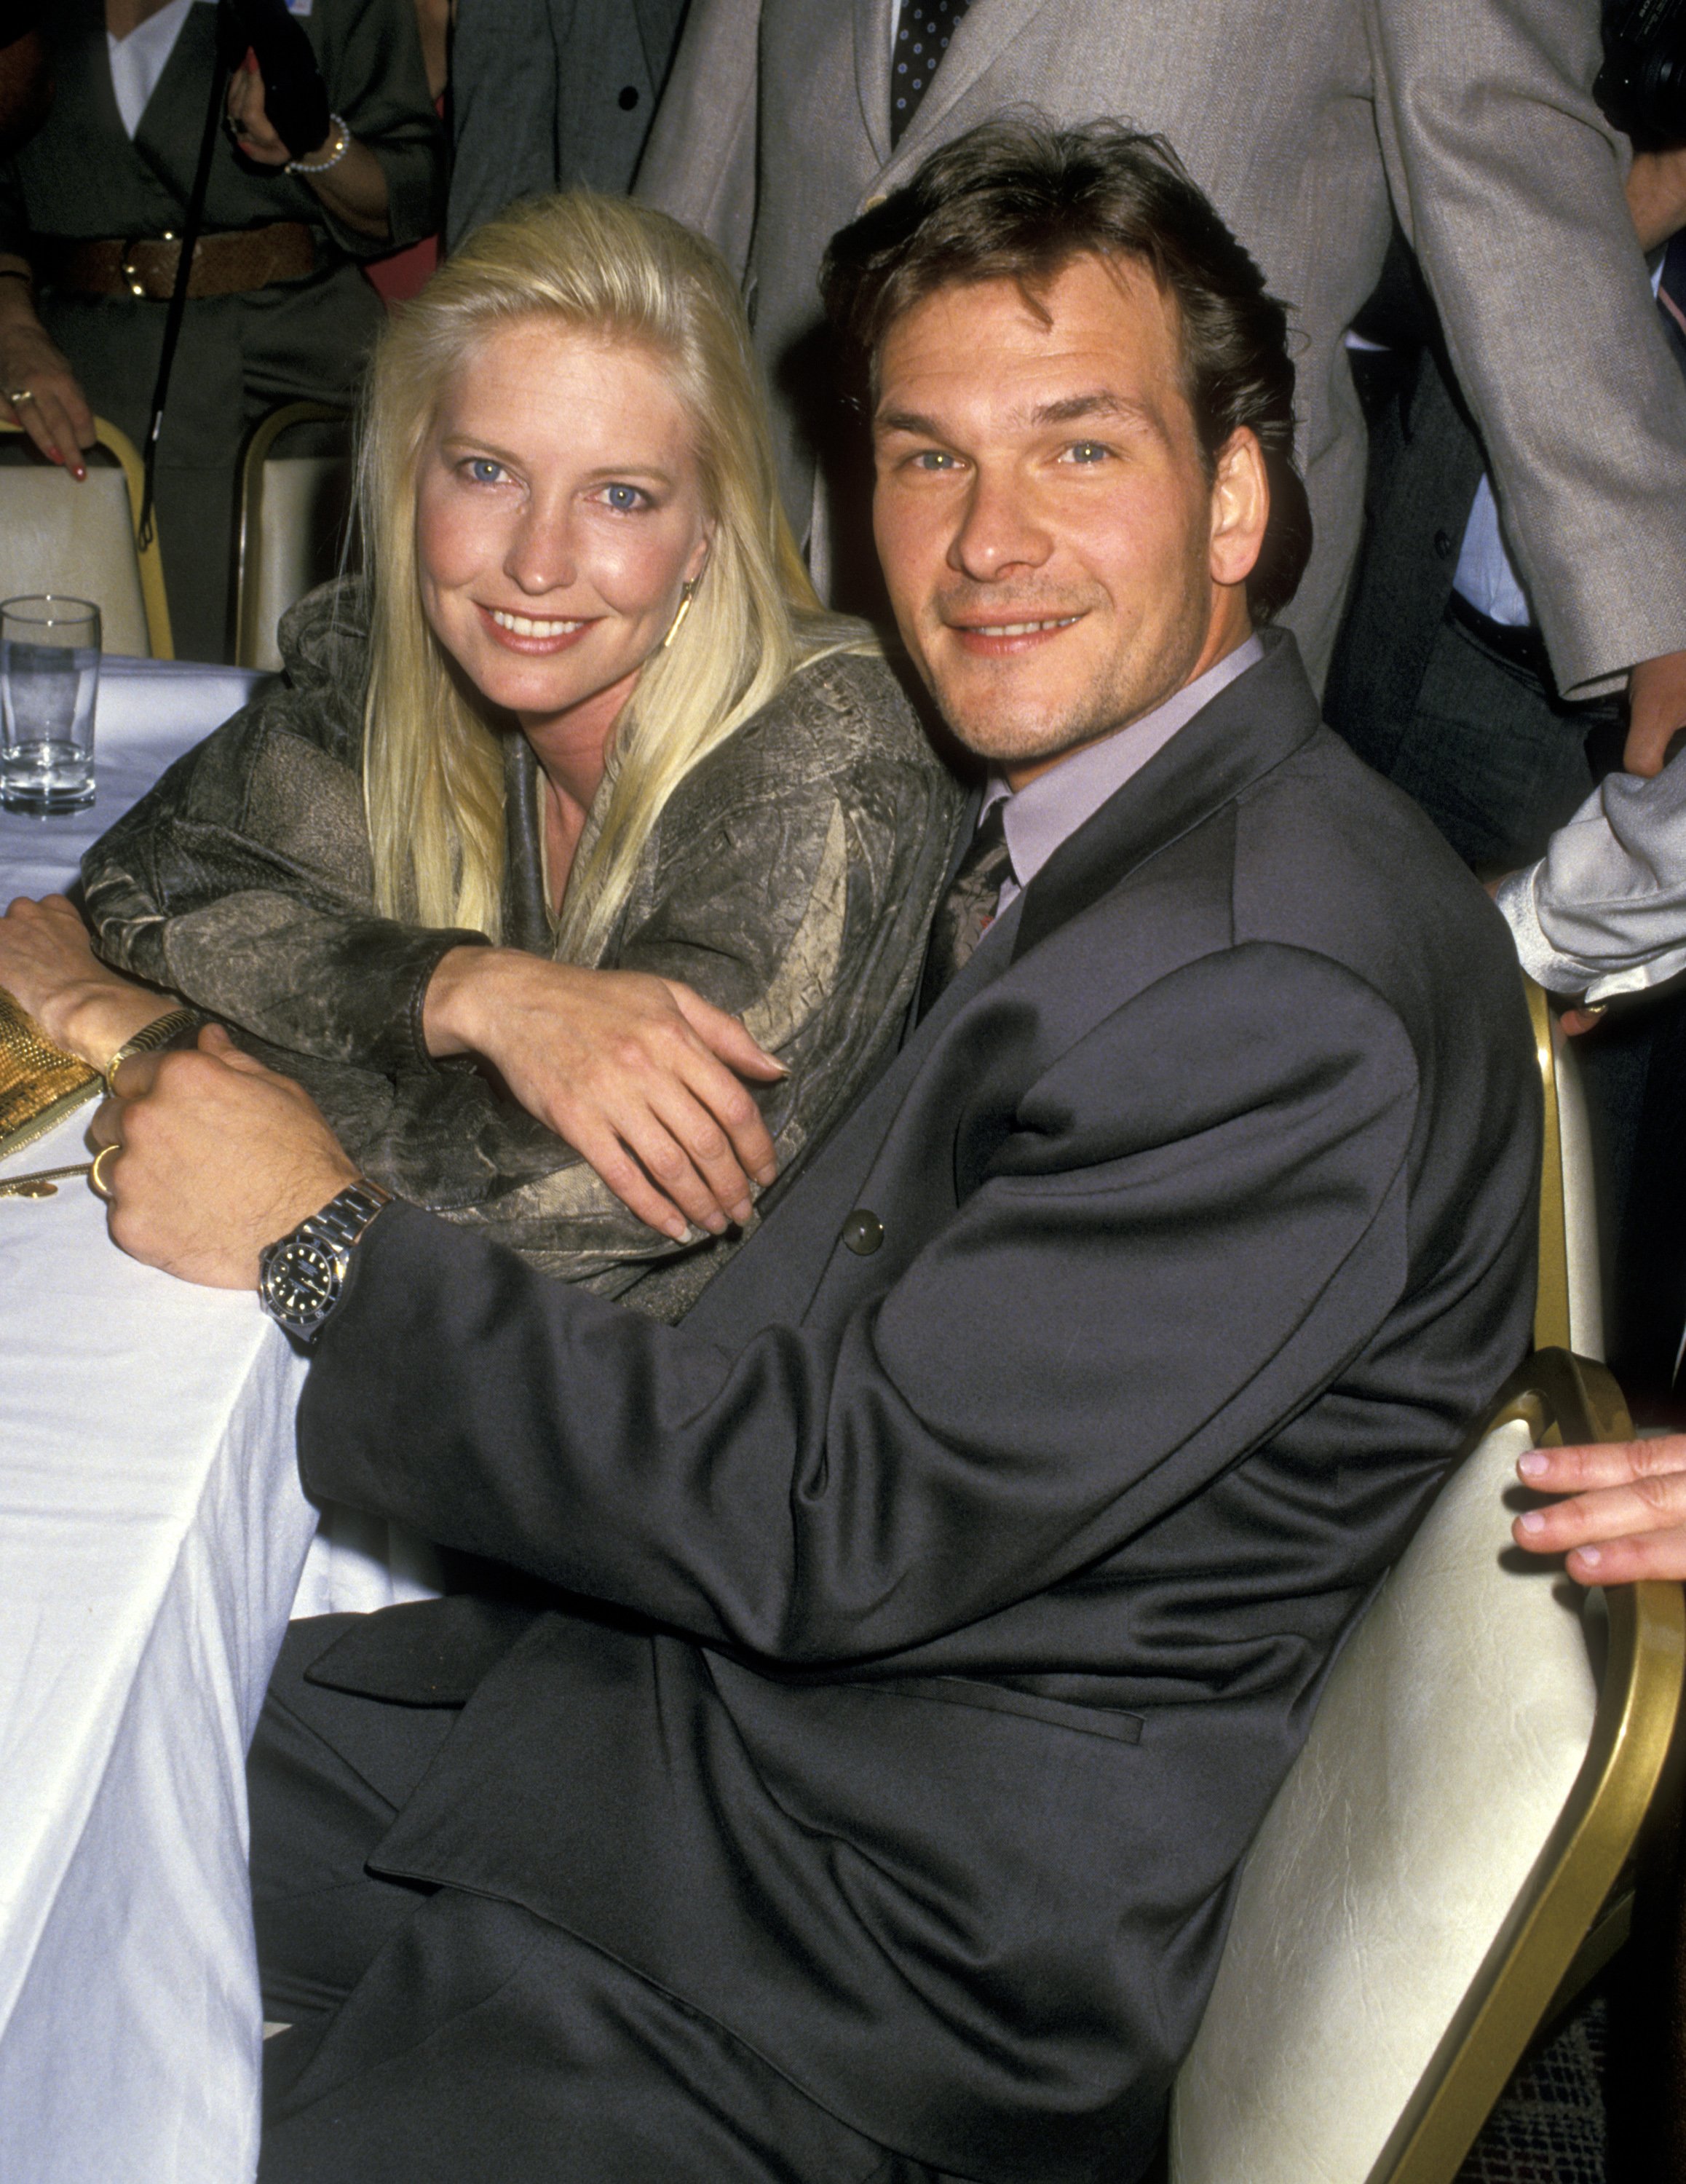 Patrick Swayze and Lisa Niemi in Las Vegas 1988. | Source: Getty Images